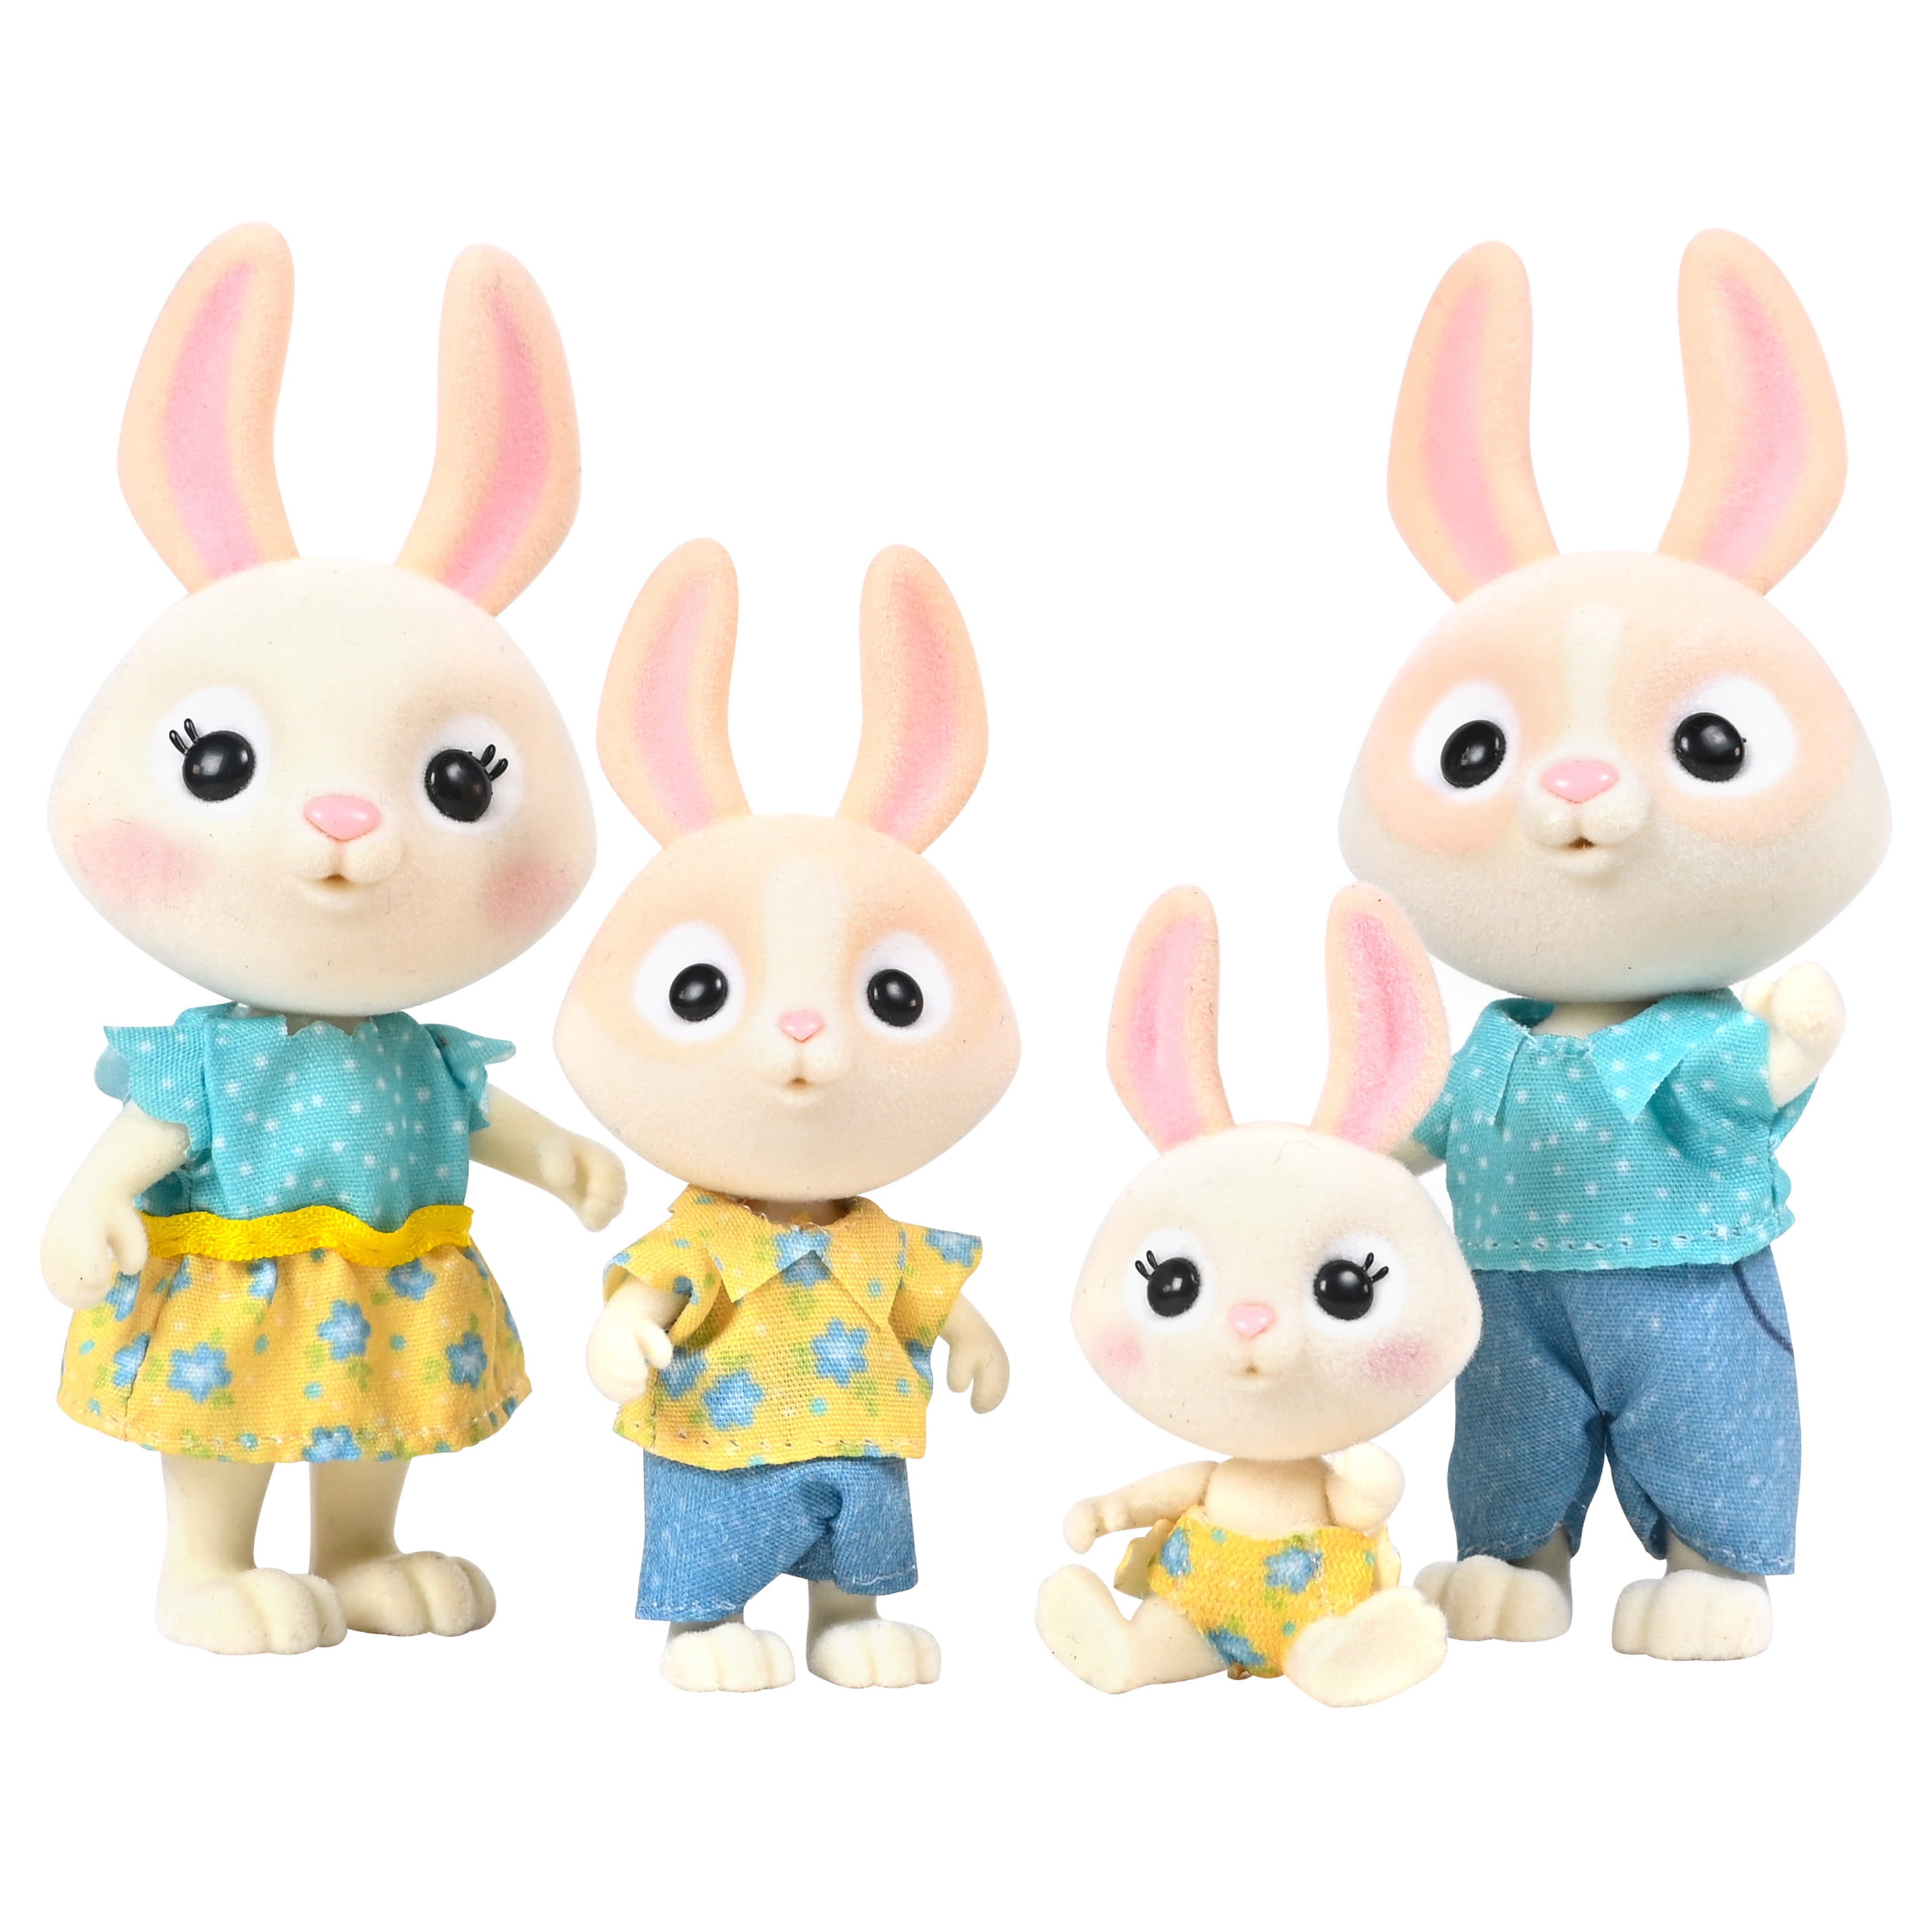 Personalised kids childrens money box in baby bunnies rabbit design gift idea 